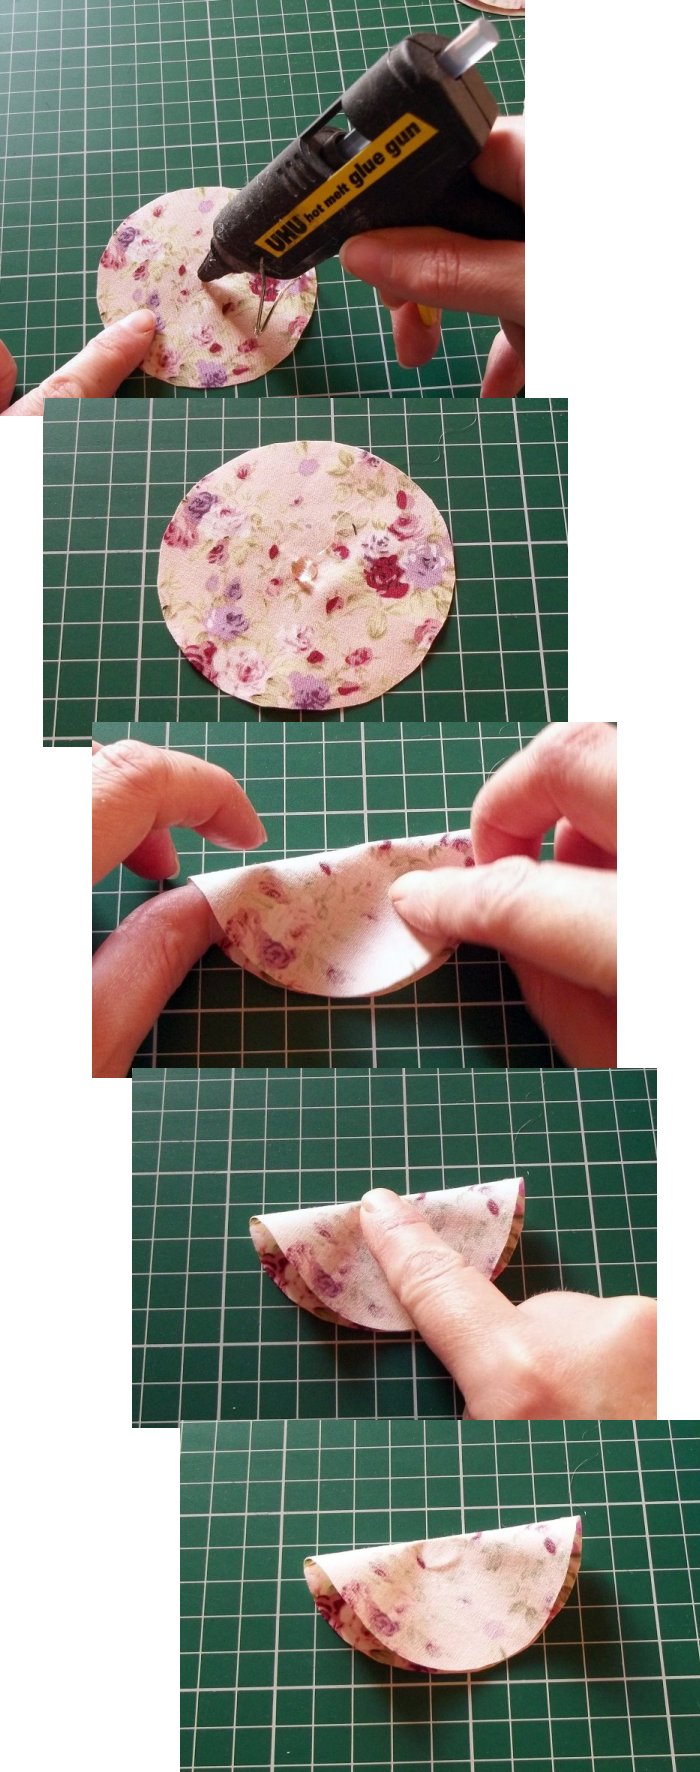 Things to make and do - Make A Fabric Pom-Pom Lightshade